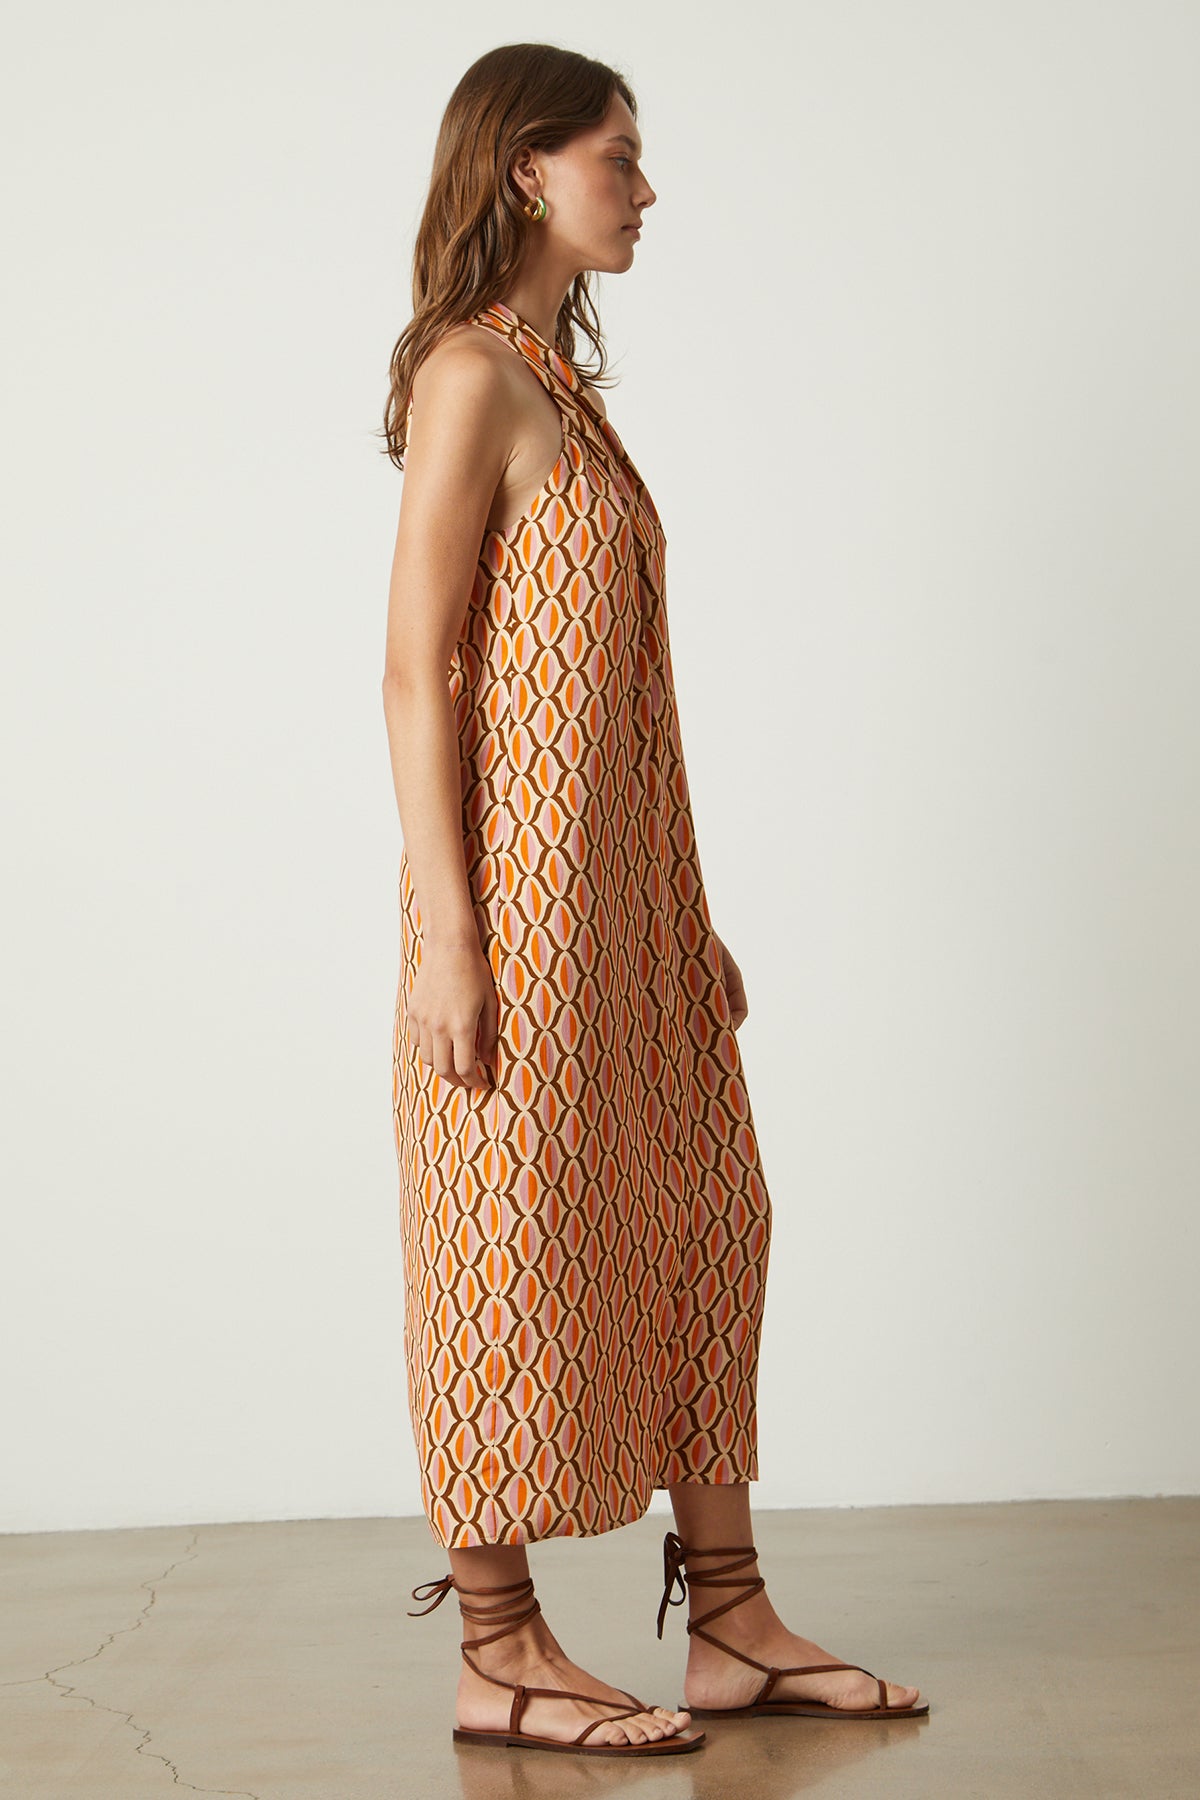 Caterina dress in orange geometric pattern gold earrings and sandals side-26079027069121